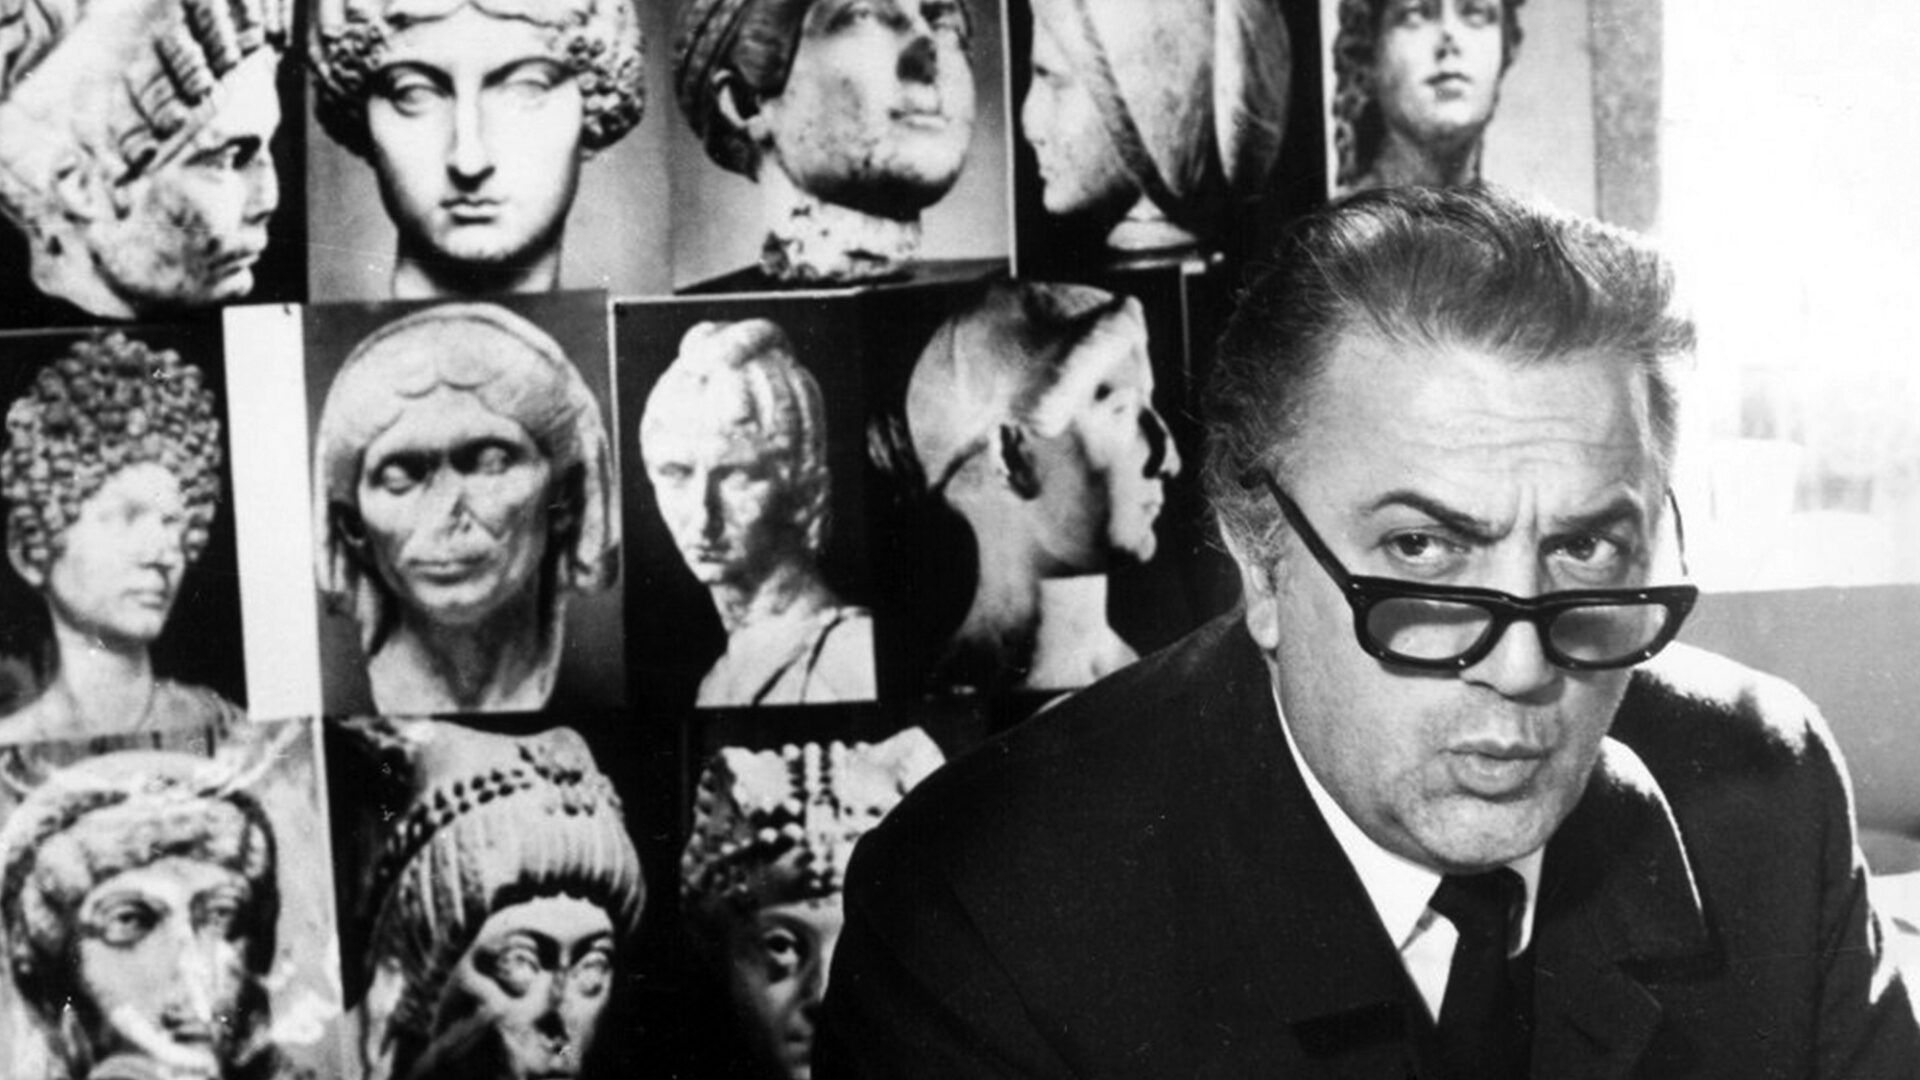 The Cinematheque to Celebrate the Films of Federico Fellini Through November